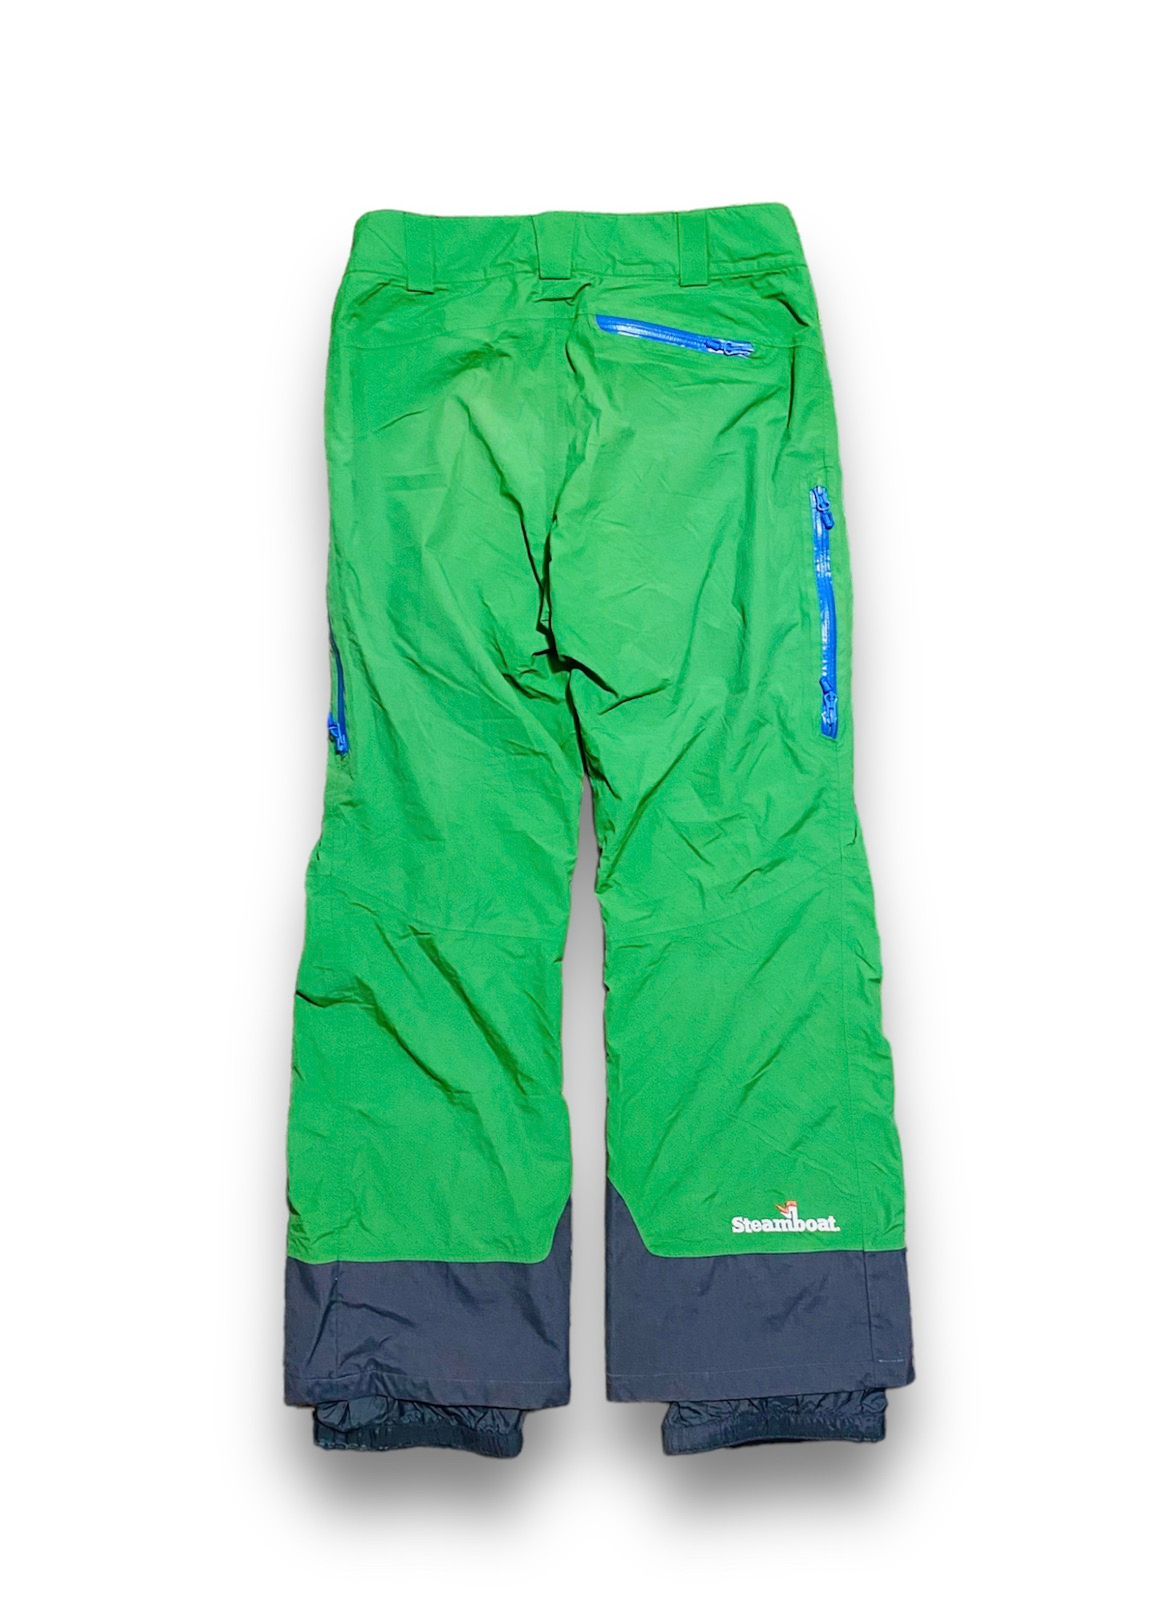 Marmot GTX Pants Trousers Skiing Hiking Outdoor Green Men XL - 8